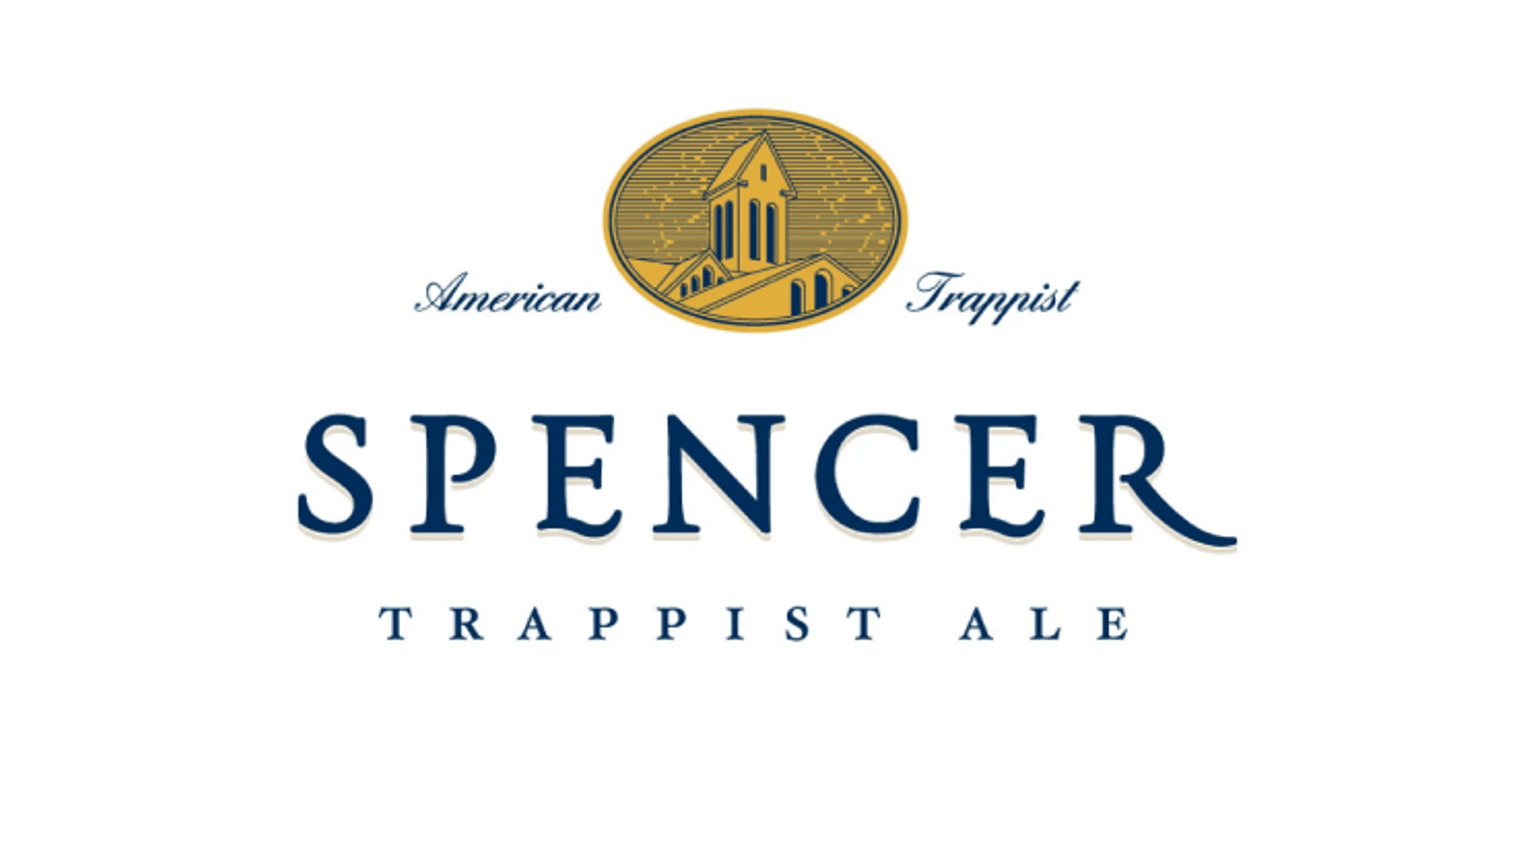 thumbnail for blog article named: Spencer, la birra Trappista americana